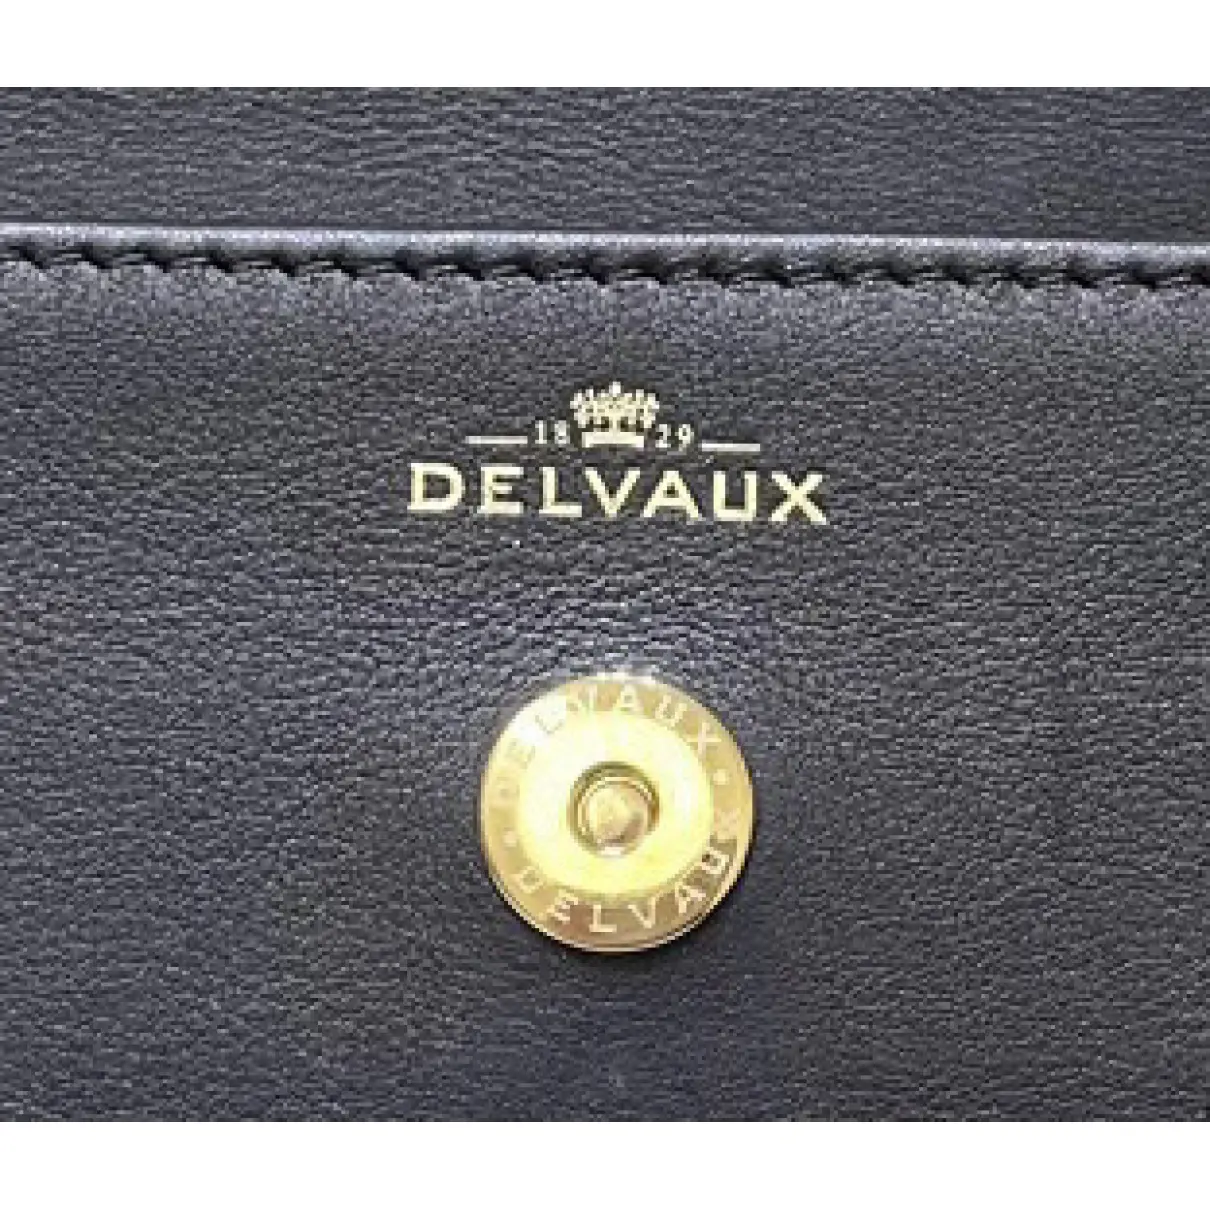 Buy Delvaux Tempête leather bag online